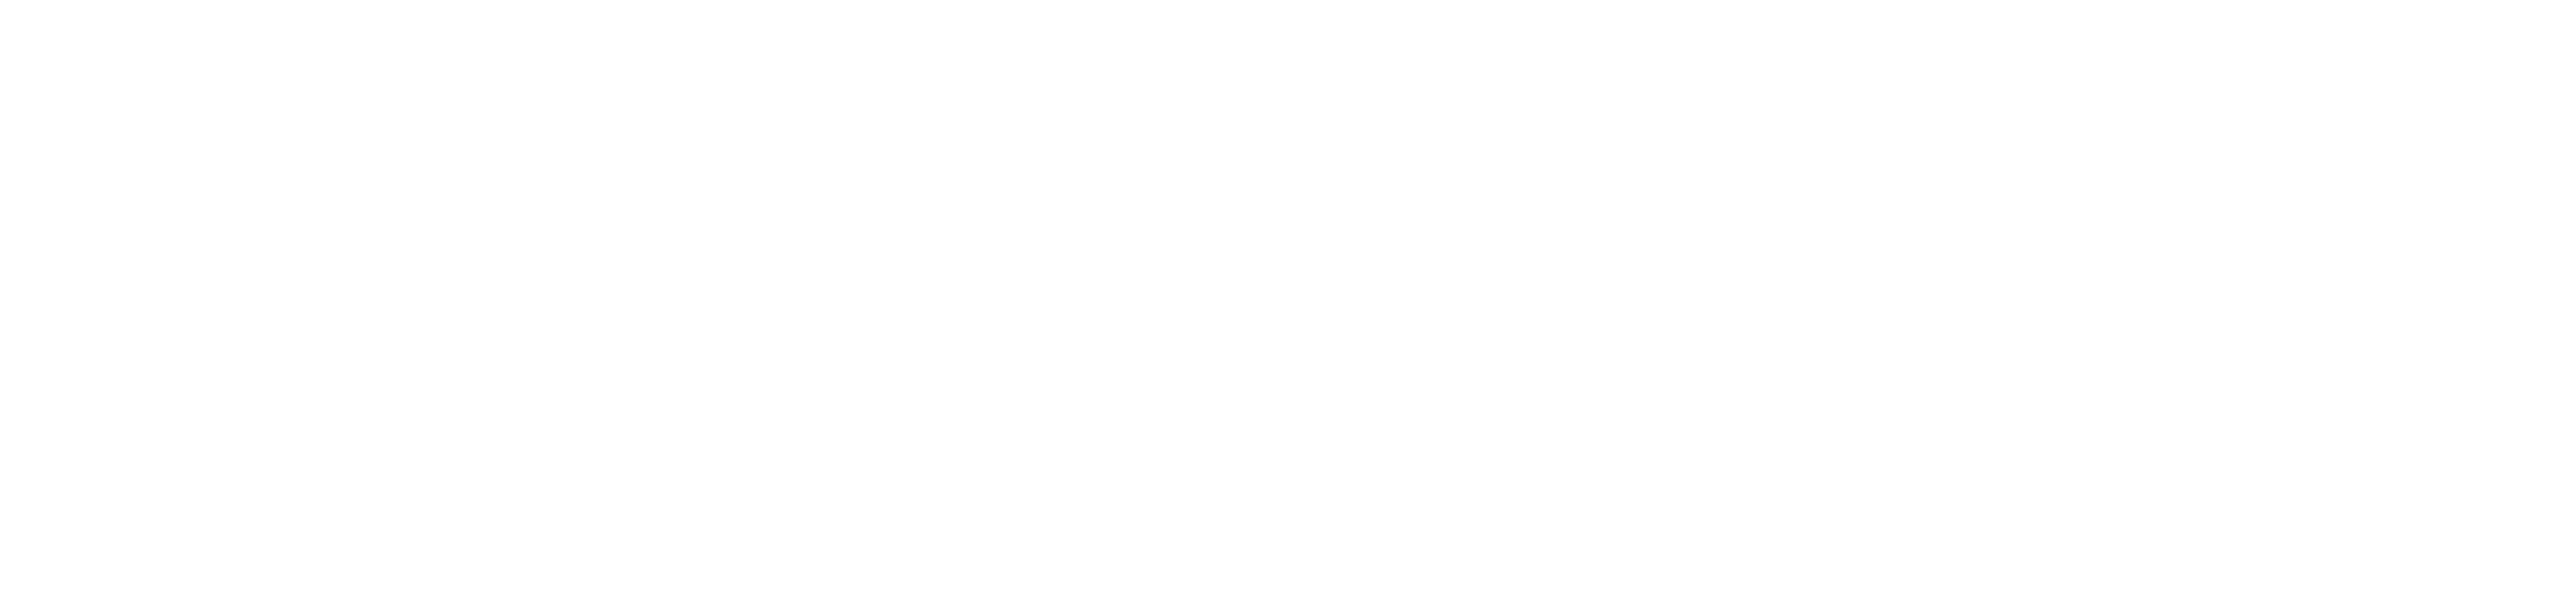 Hail to the Deadites